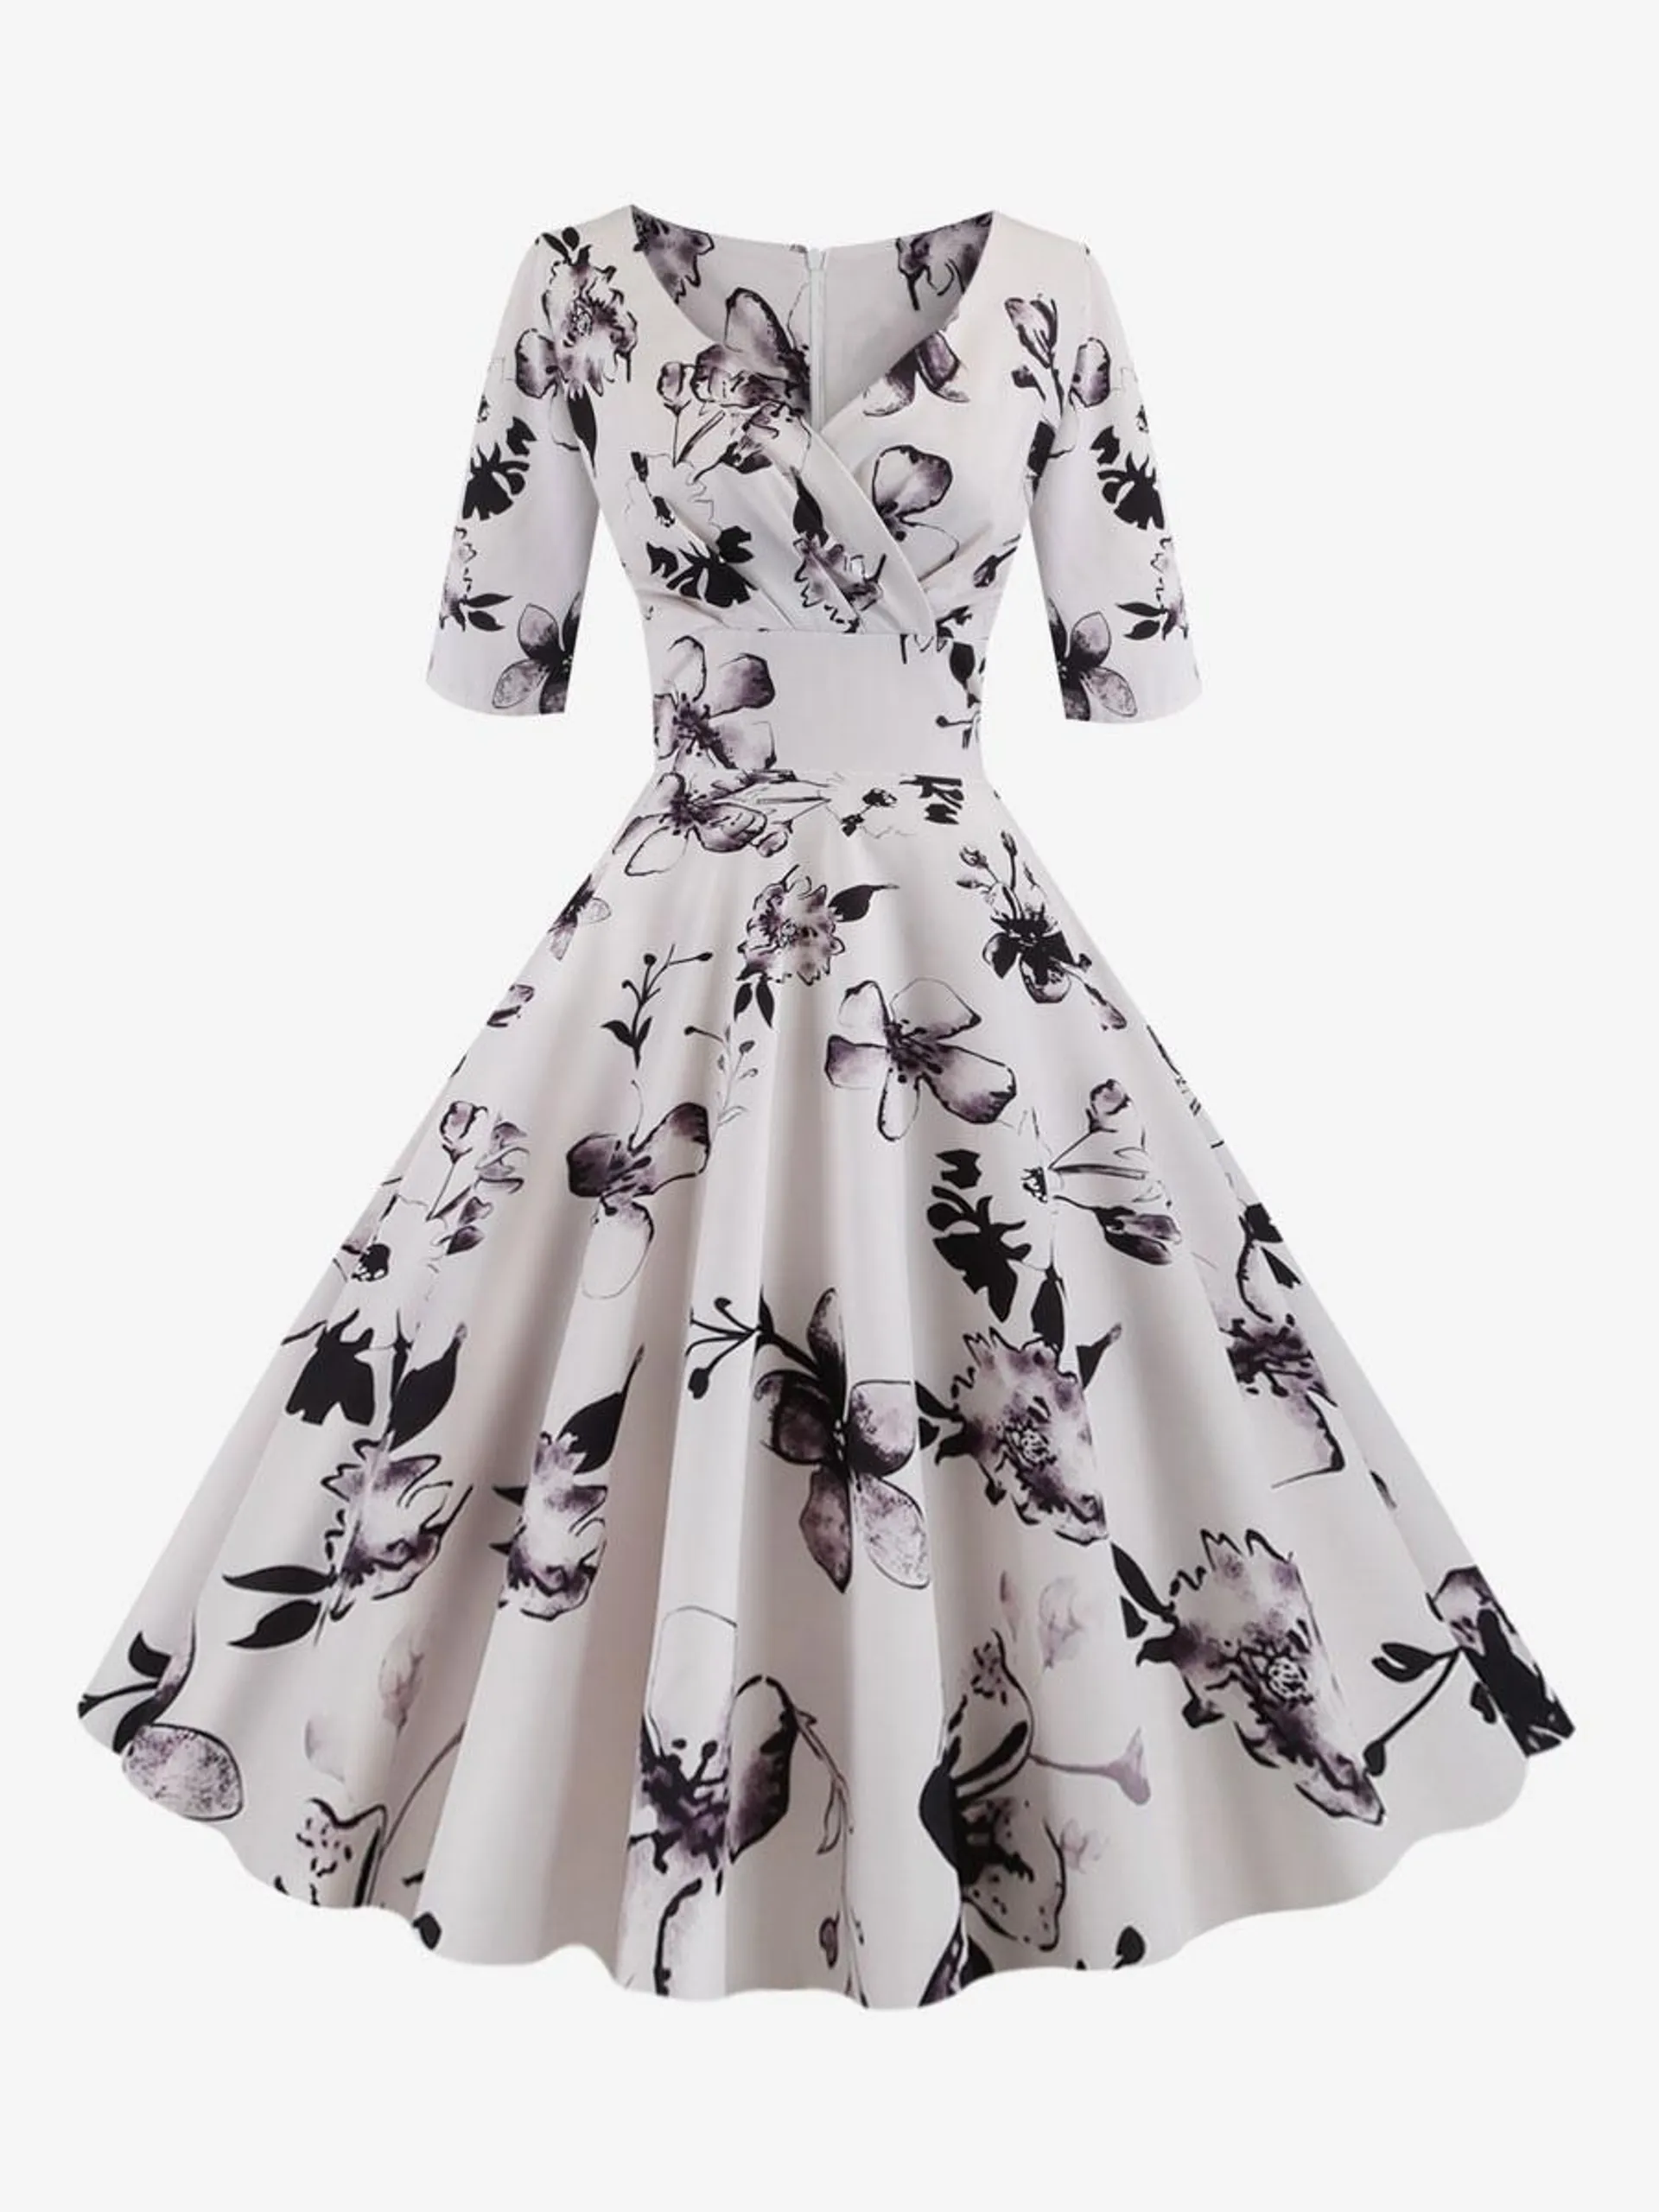 Vintage Dress Black 1950s Audrey Hepburn Style Floral Print Layered Half Sleeves Sweetheart Neck Medium Rockabilly Dress